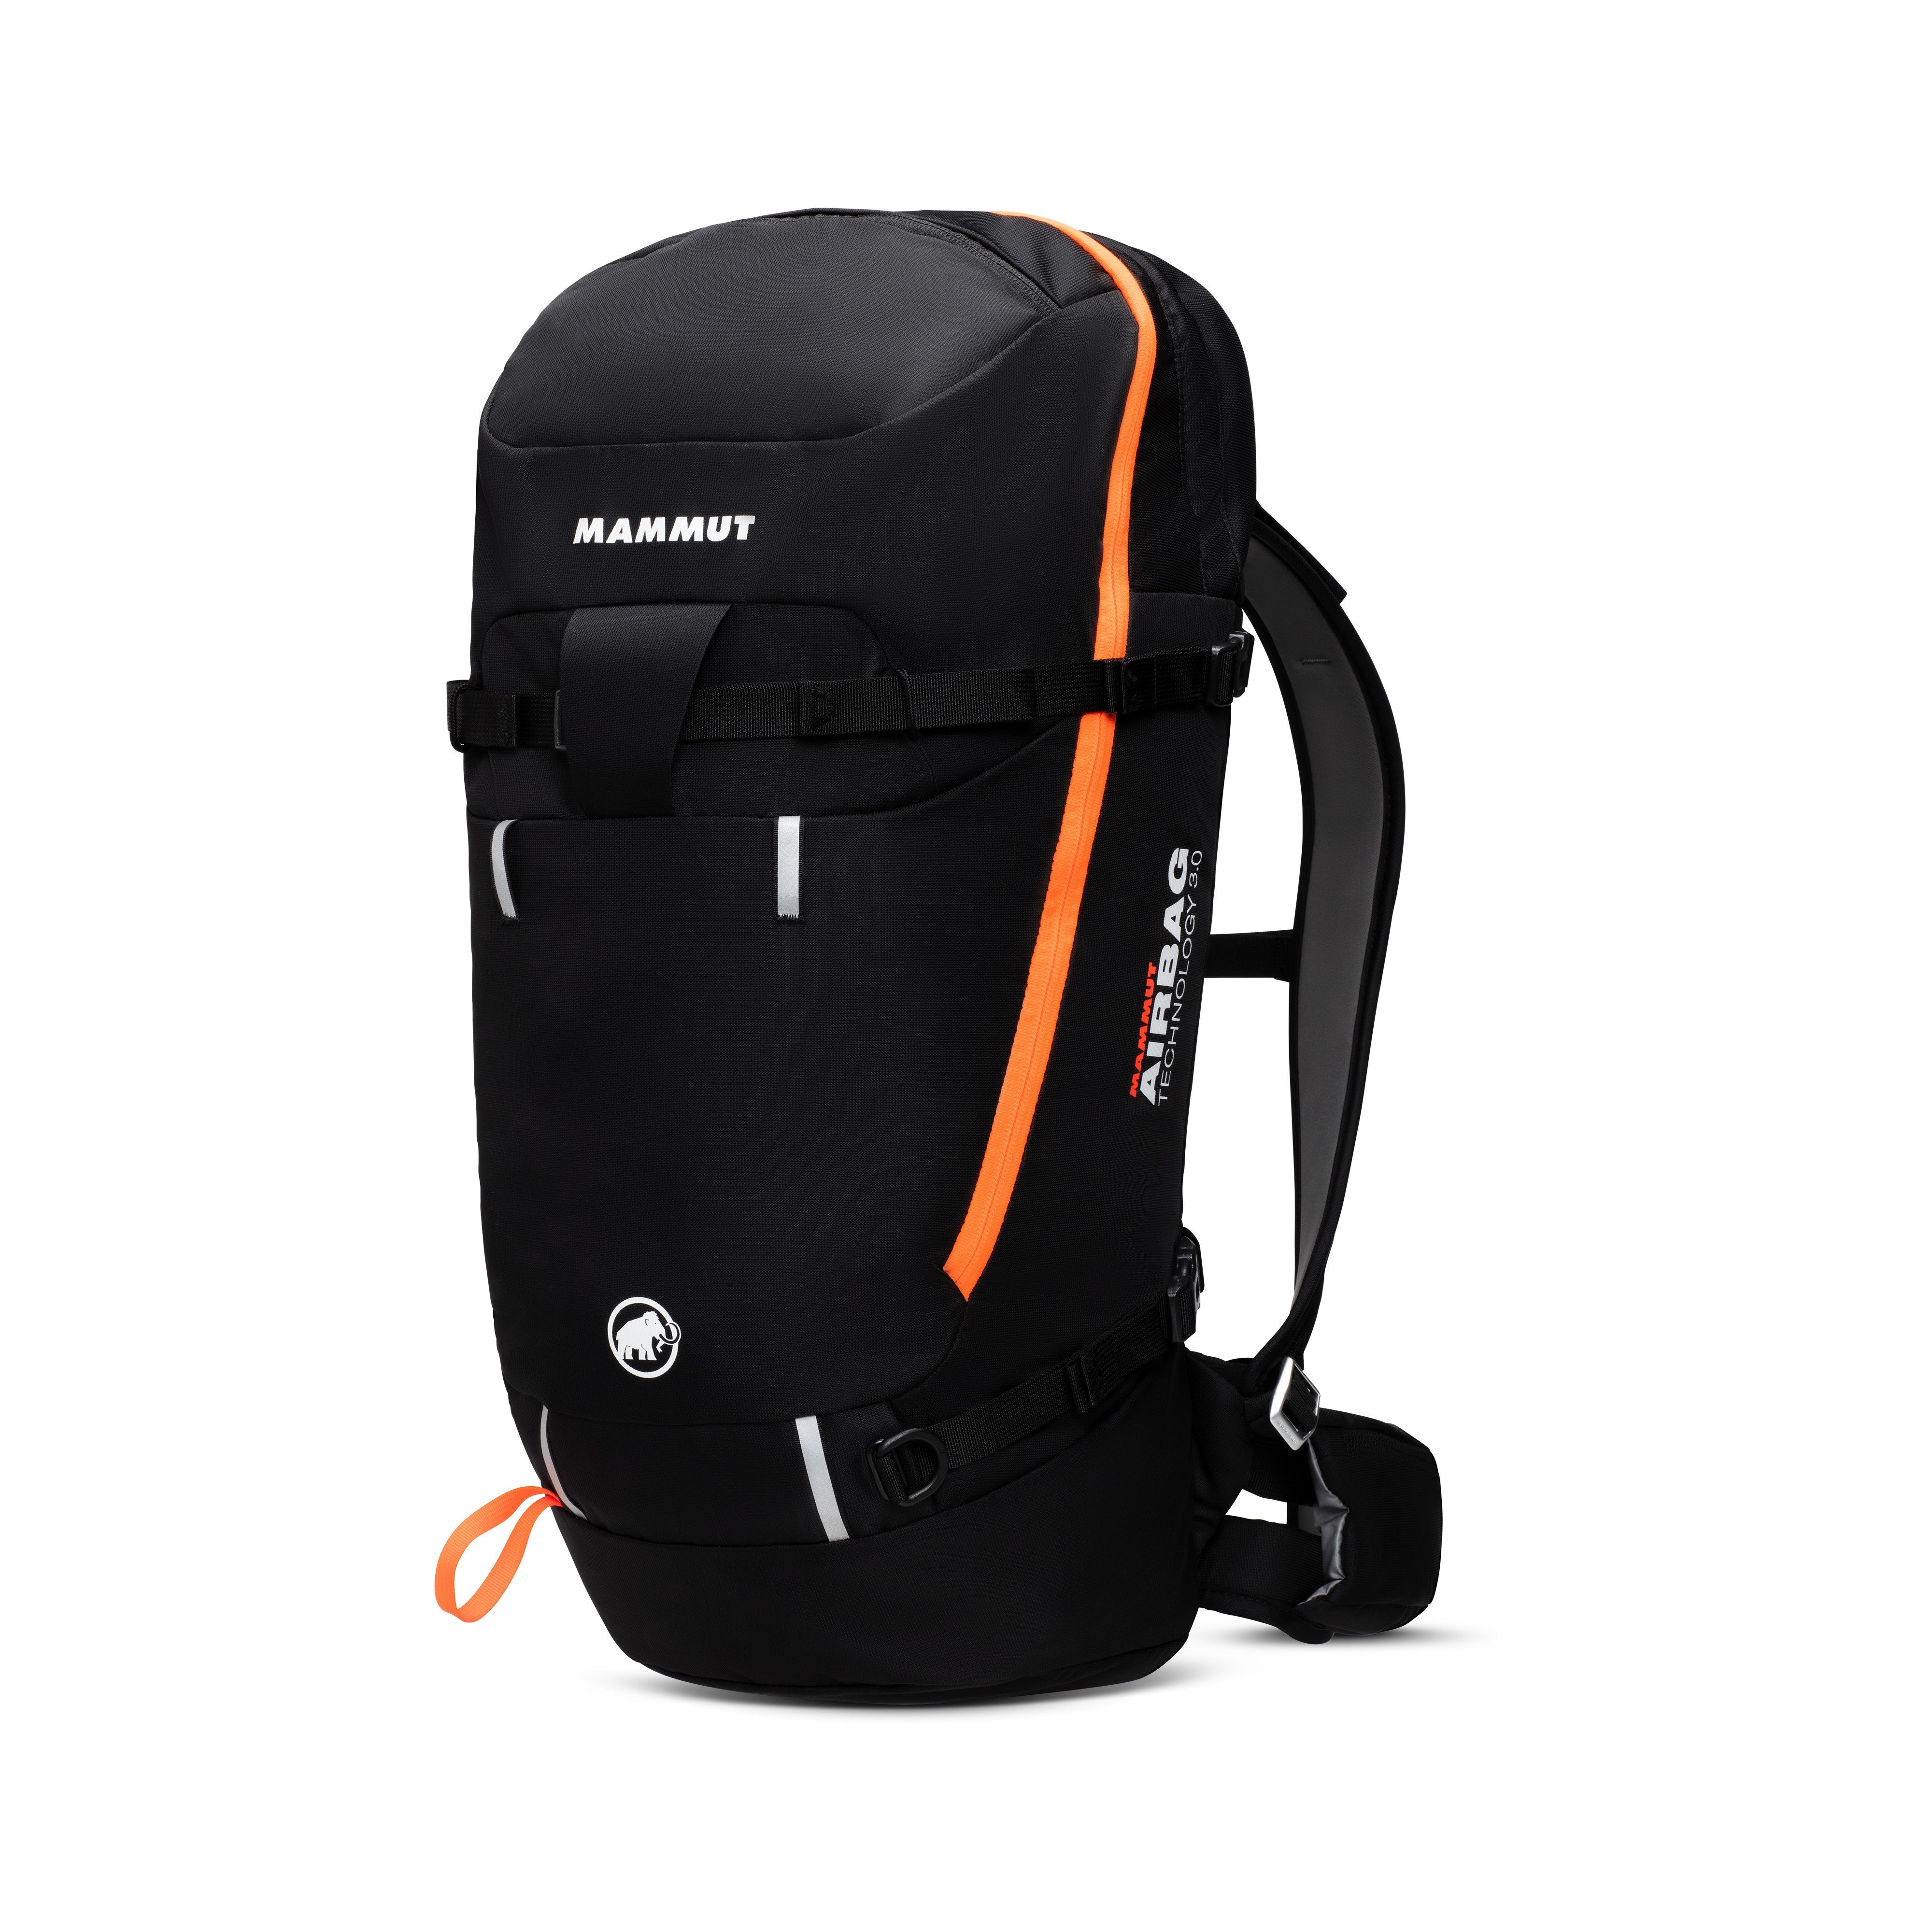 Light Removable Airbag 3.0 ready - black-vibrant orange, 30 L product image